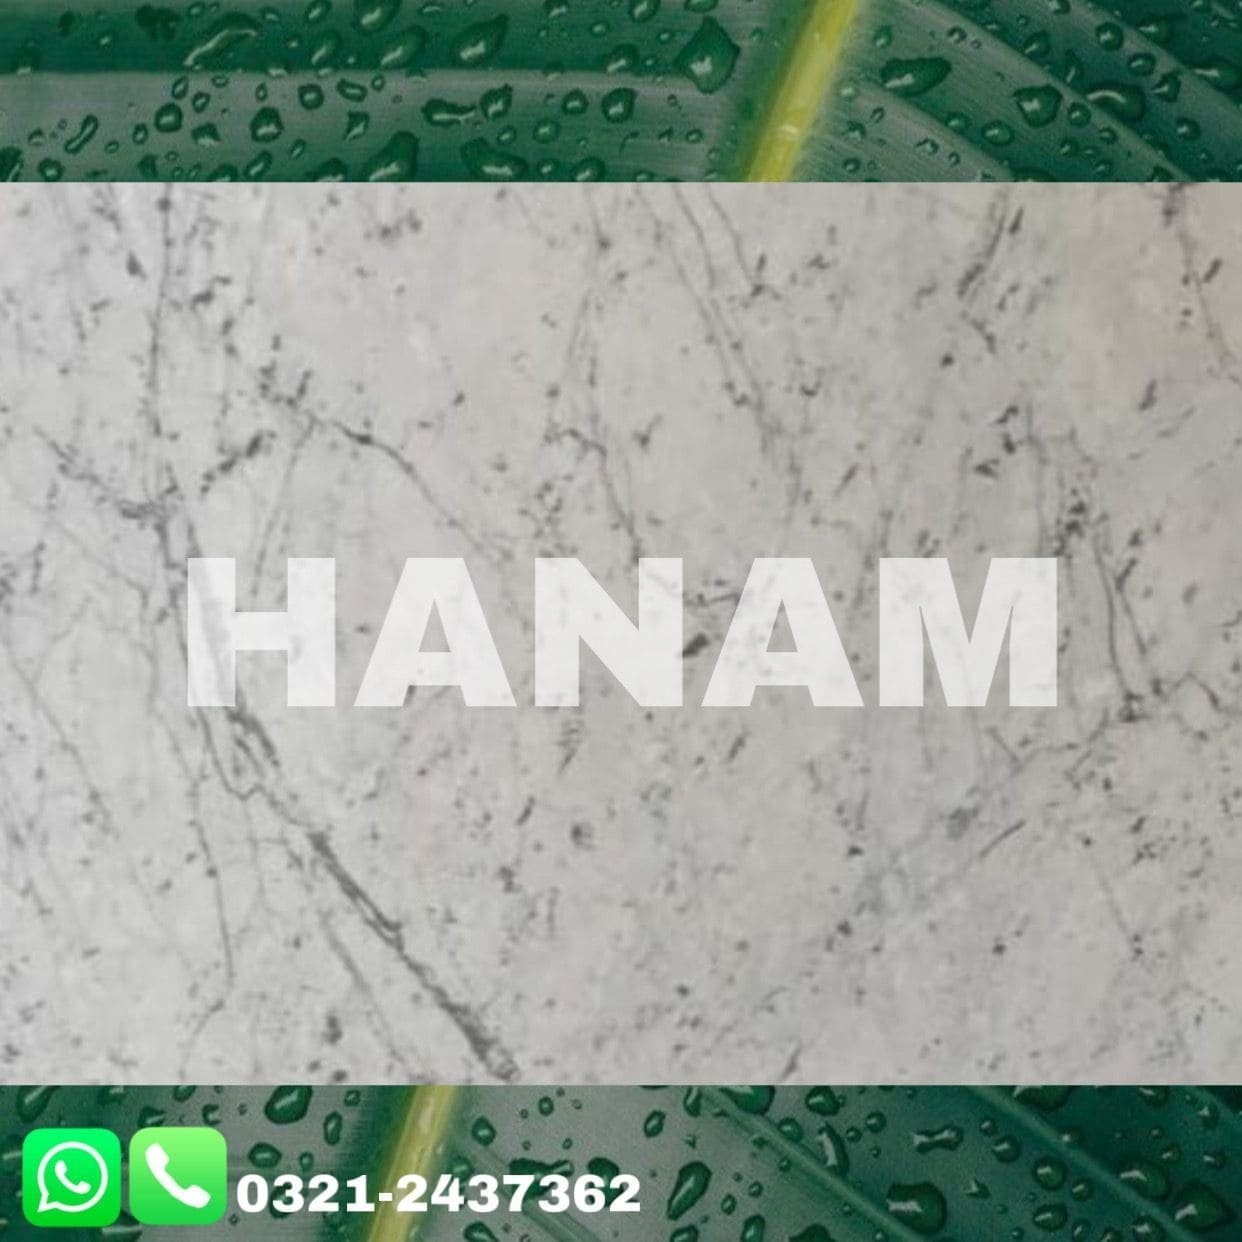 carrara-white-marble-pakistan-0321-2437362-big-5